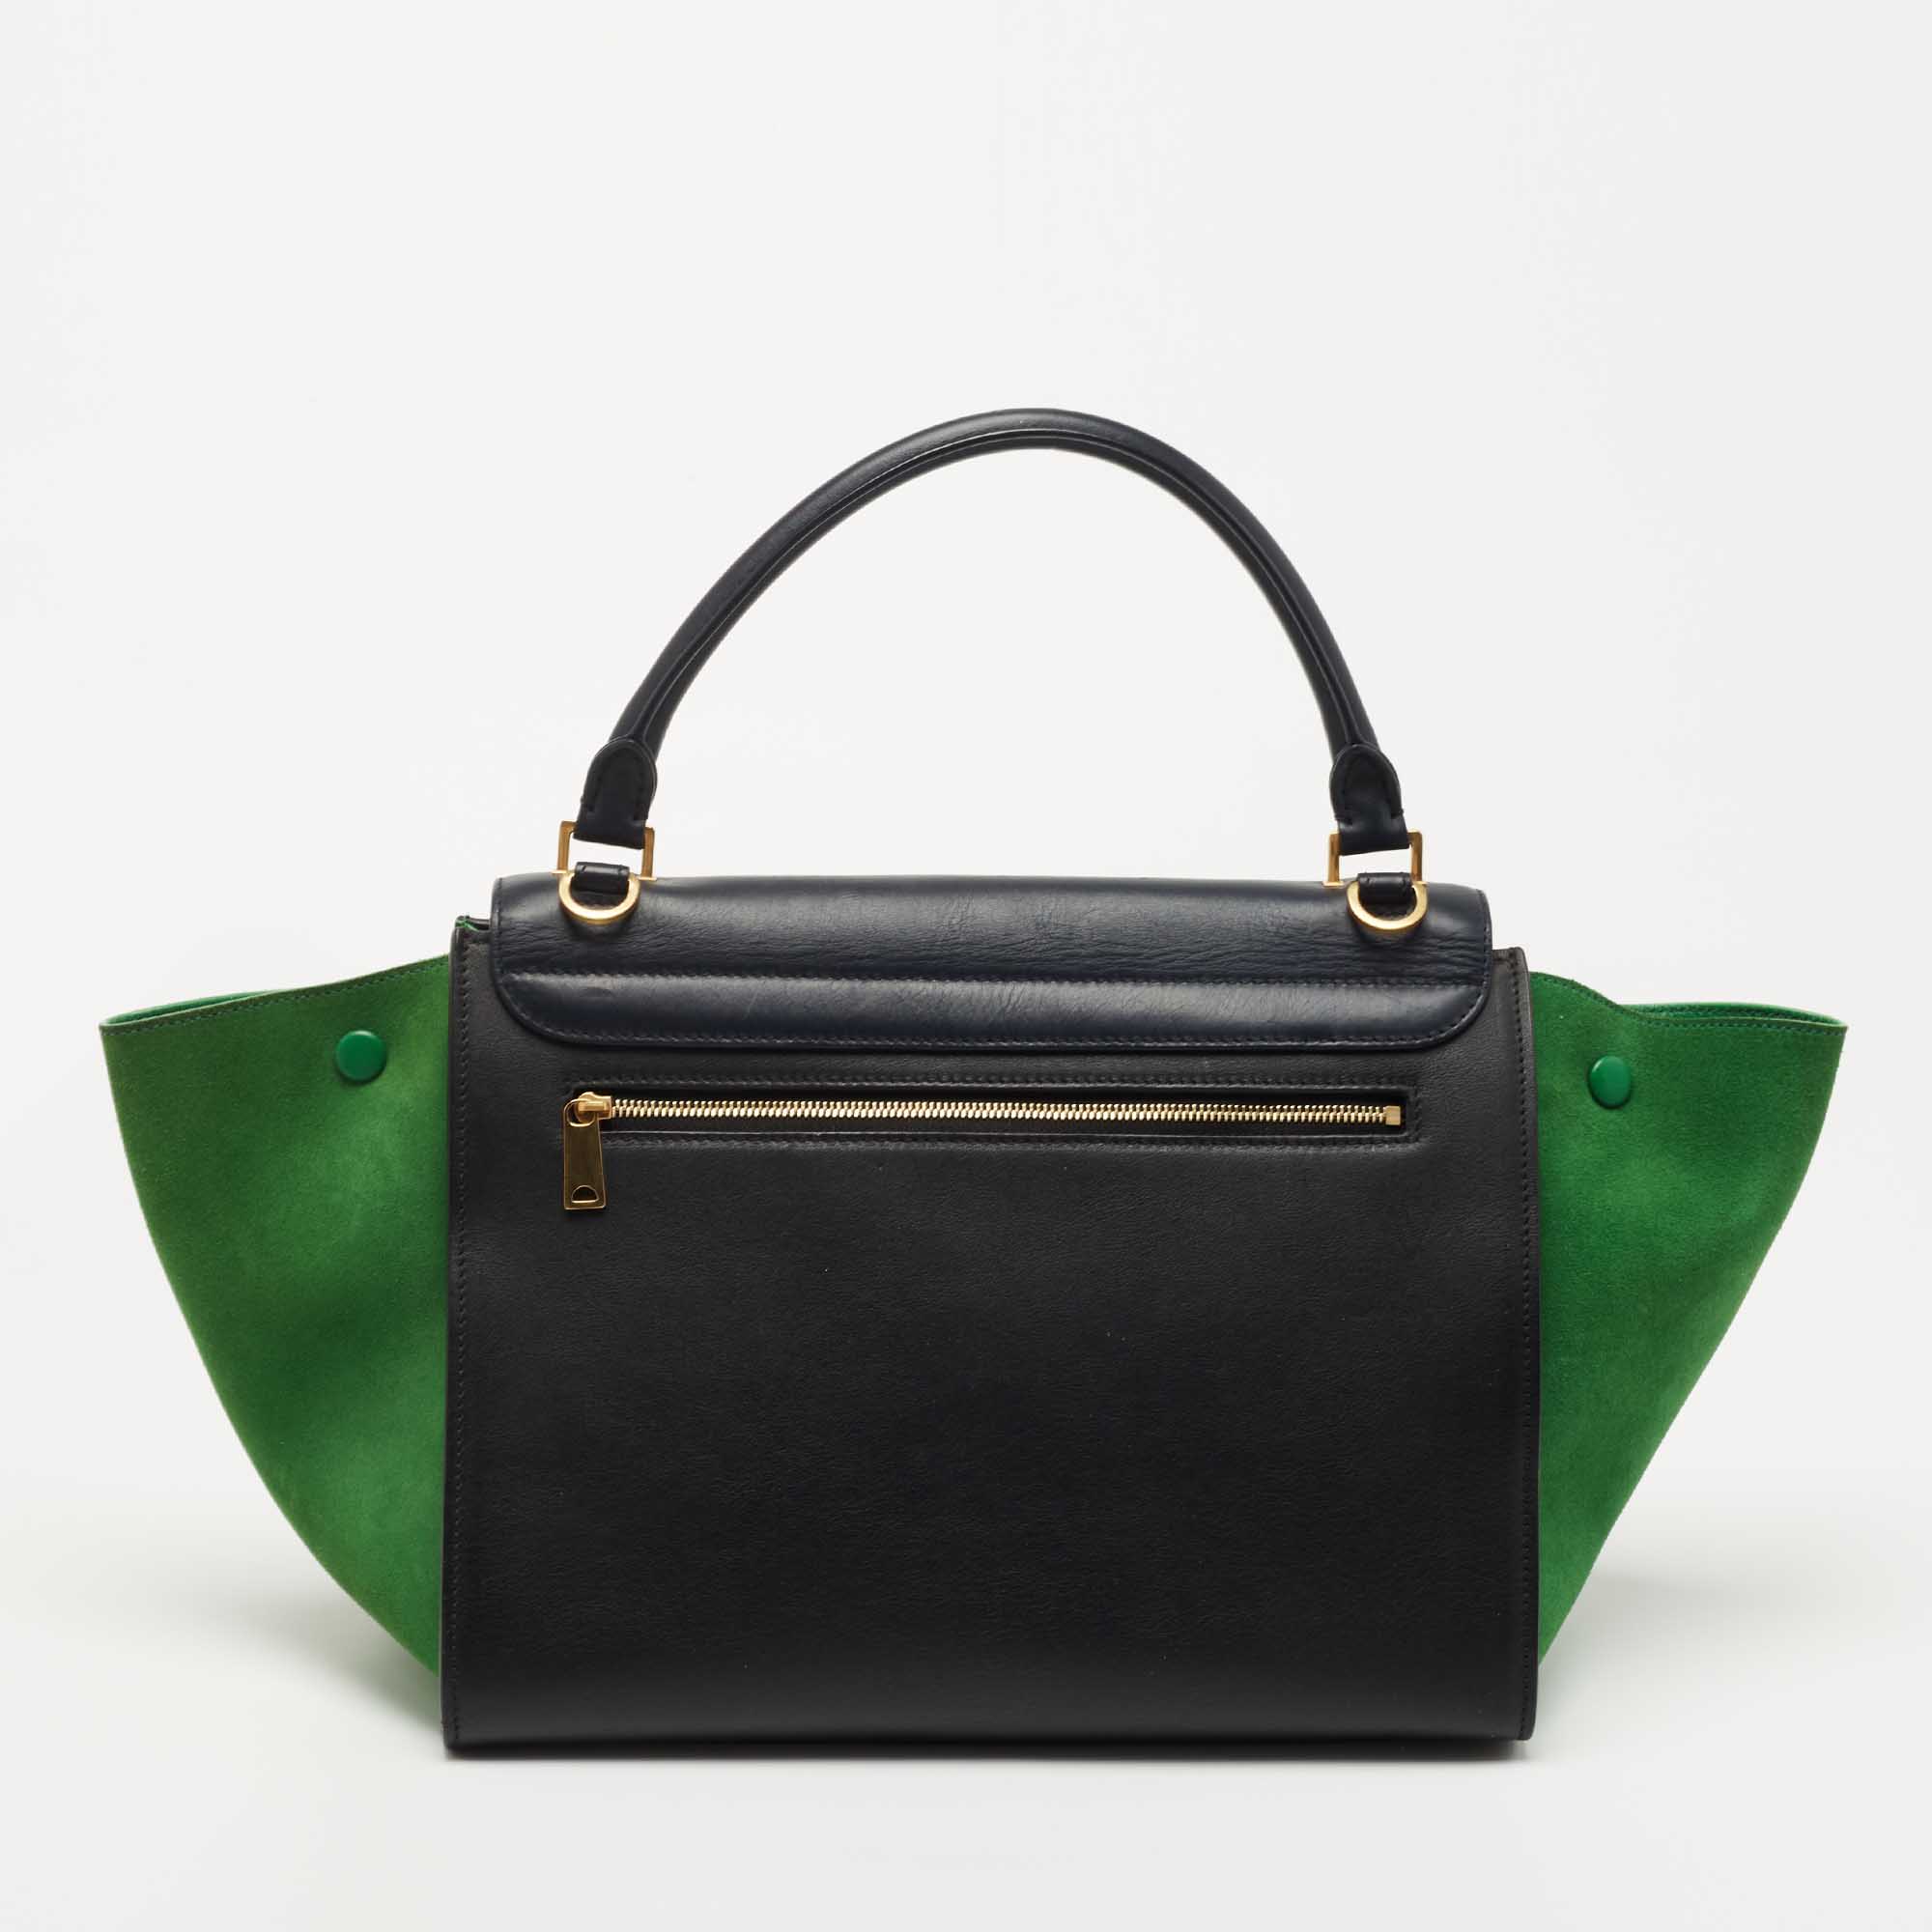 Celine Tricolor Leather And Suede Medium Trapeze Top Handle Bag